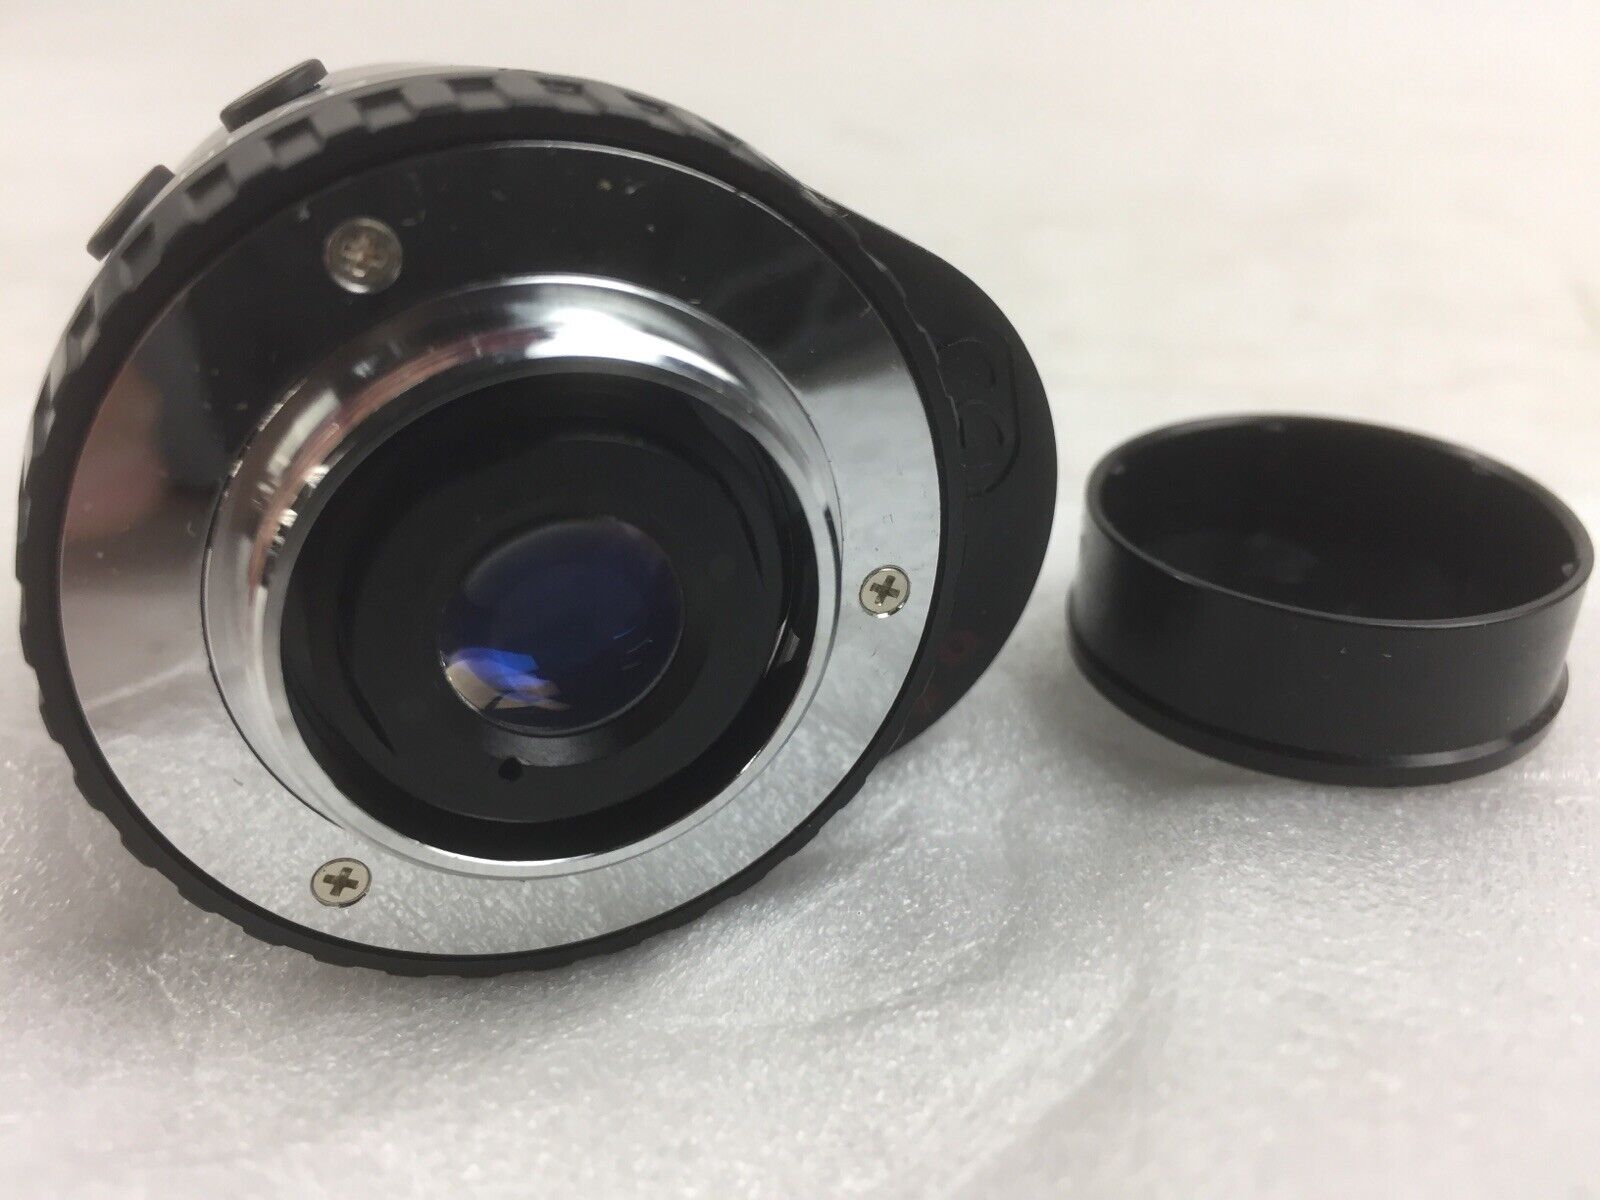 Rainbow L4mm GE 1:1.2 1/3" Camera Lens